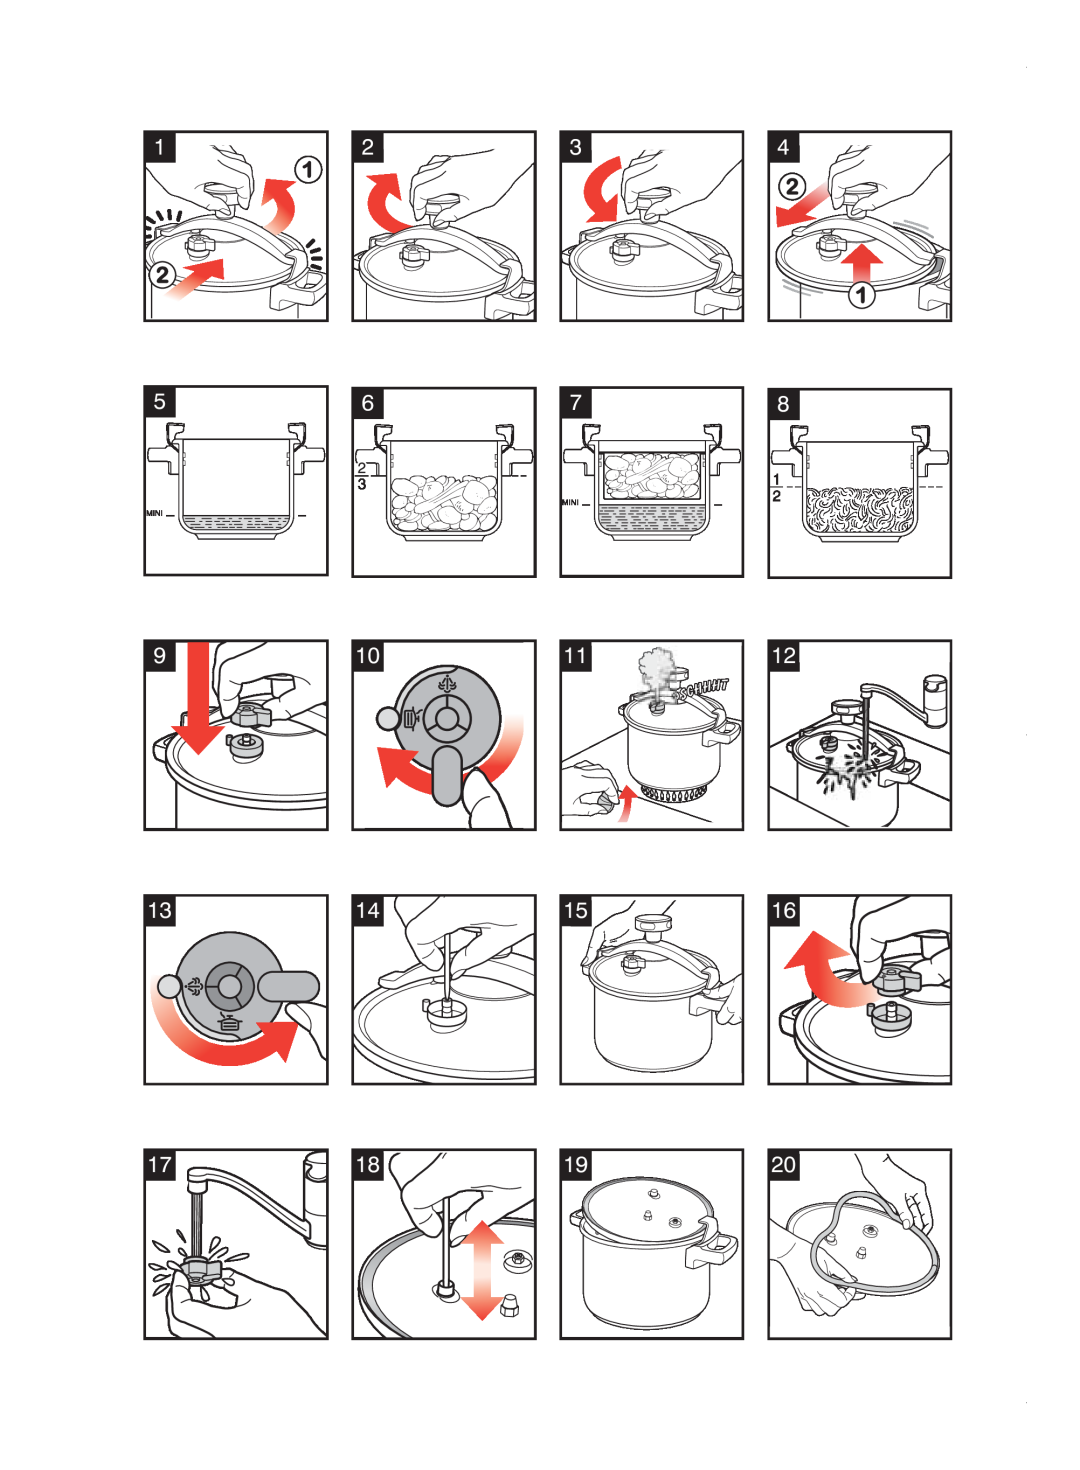 Groupe SEB USA - T-FAL Pressure Cooker user manual 